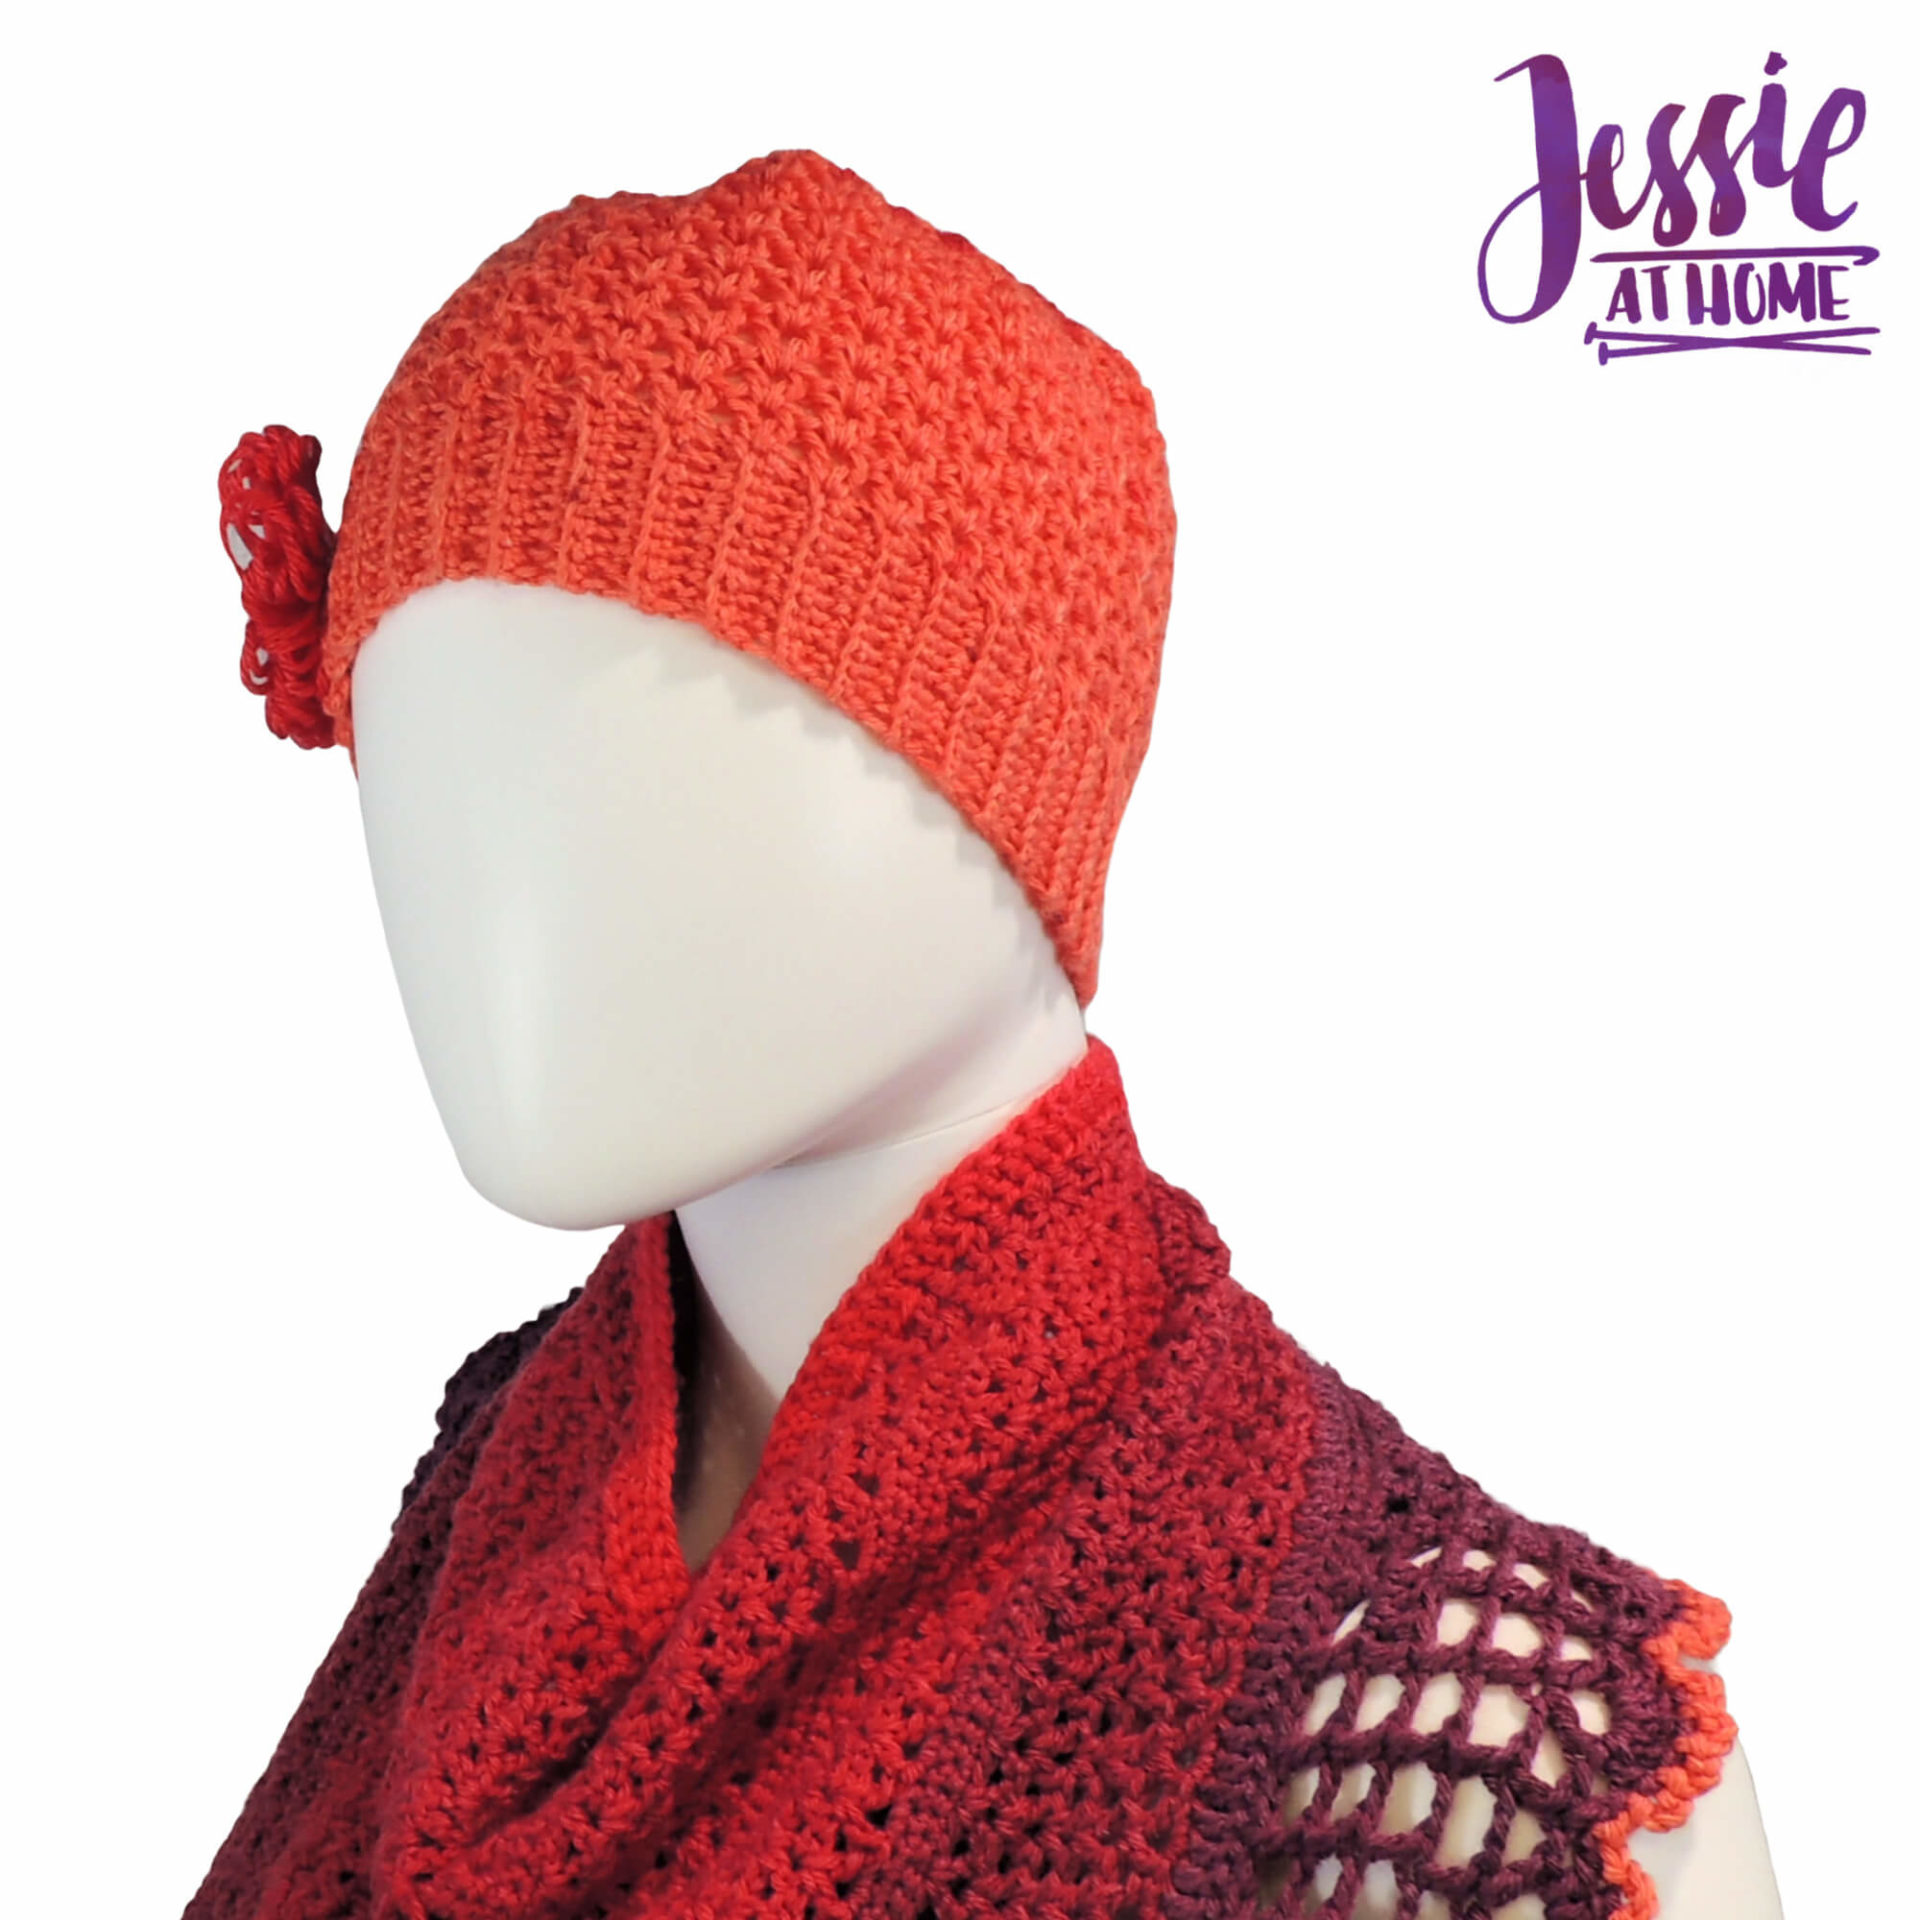 Cap-ulet - a crochet cap (beanie) for Juliette by Jessie At Home - 3